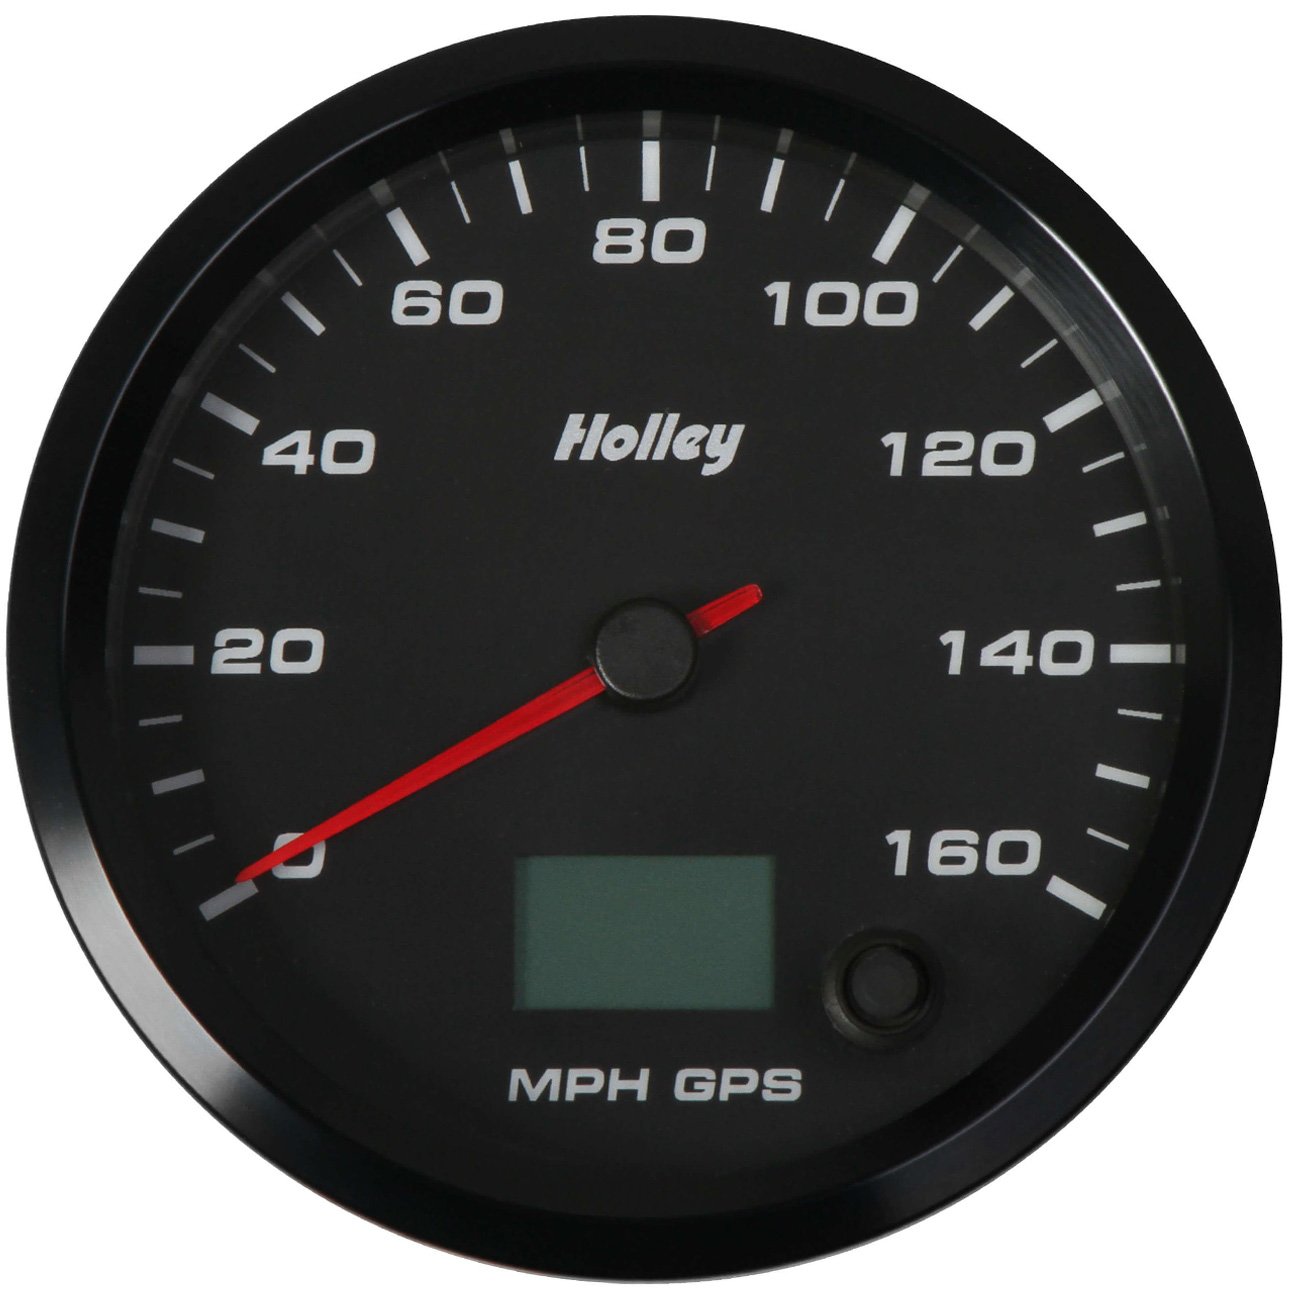 Analog-Style GPS Speedometer